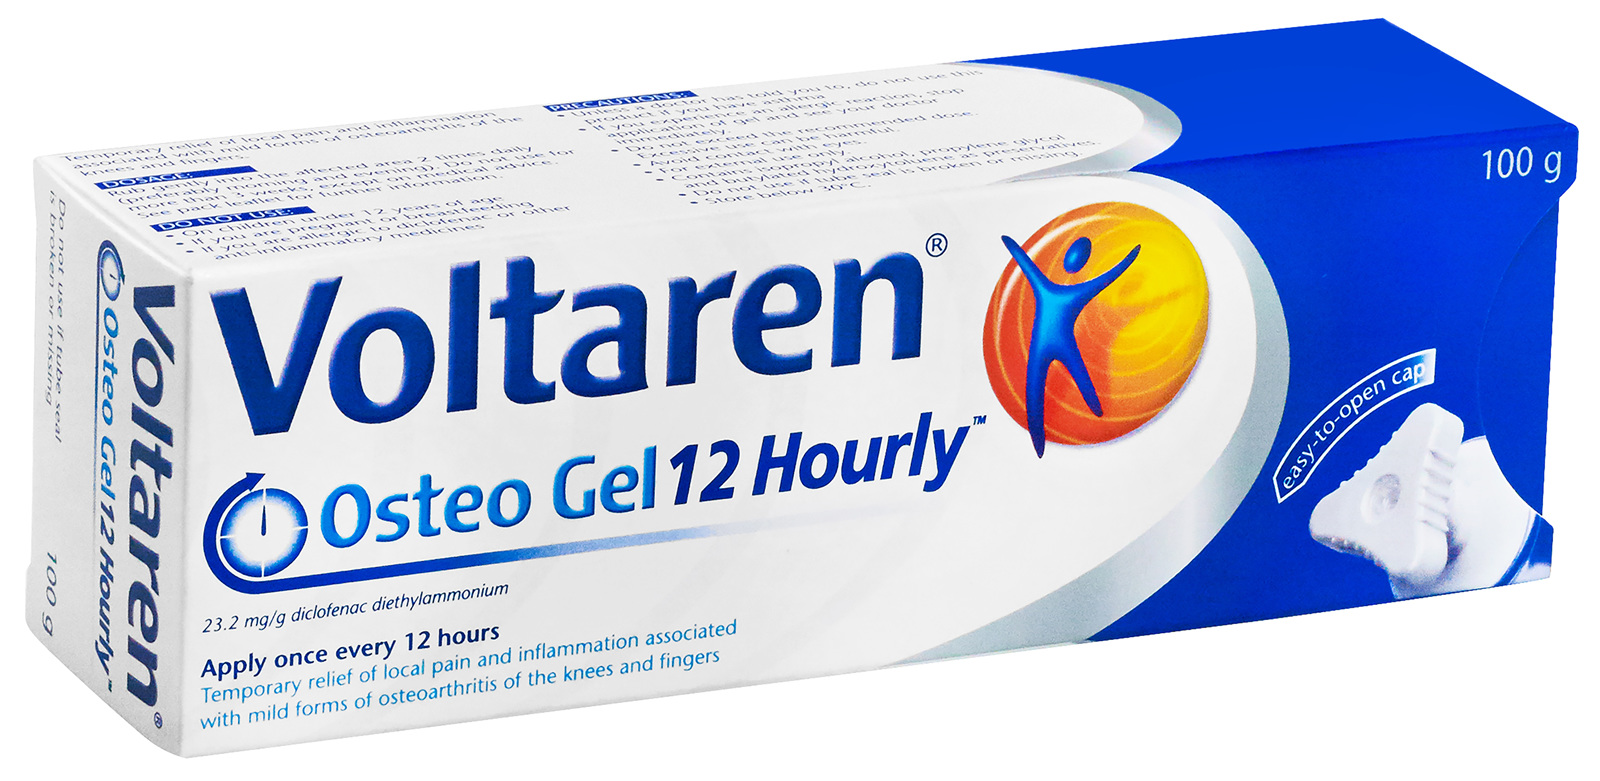 Voltaren Osteo Gel 12h 100g - Unichem Tokoroa Pharmacy Shop